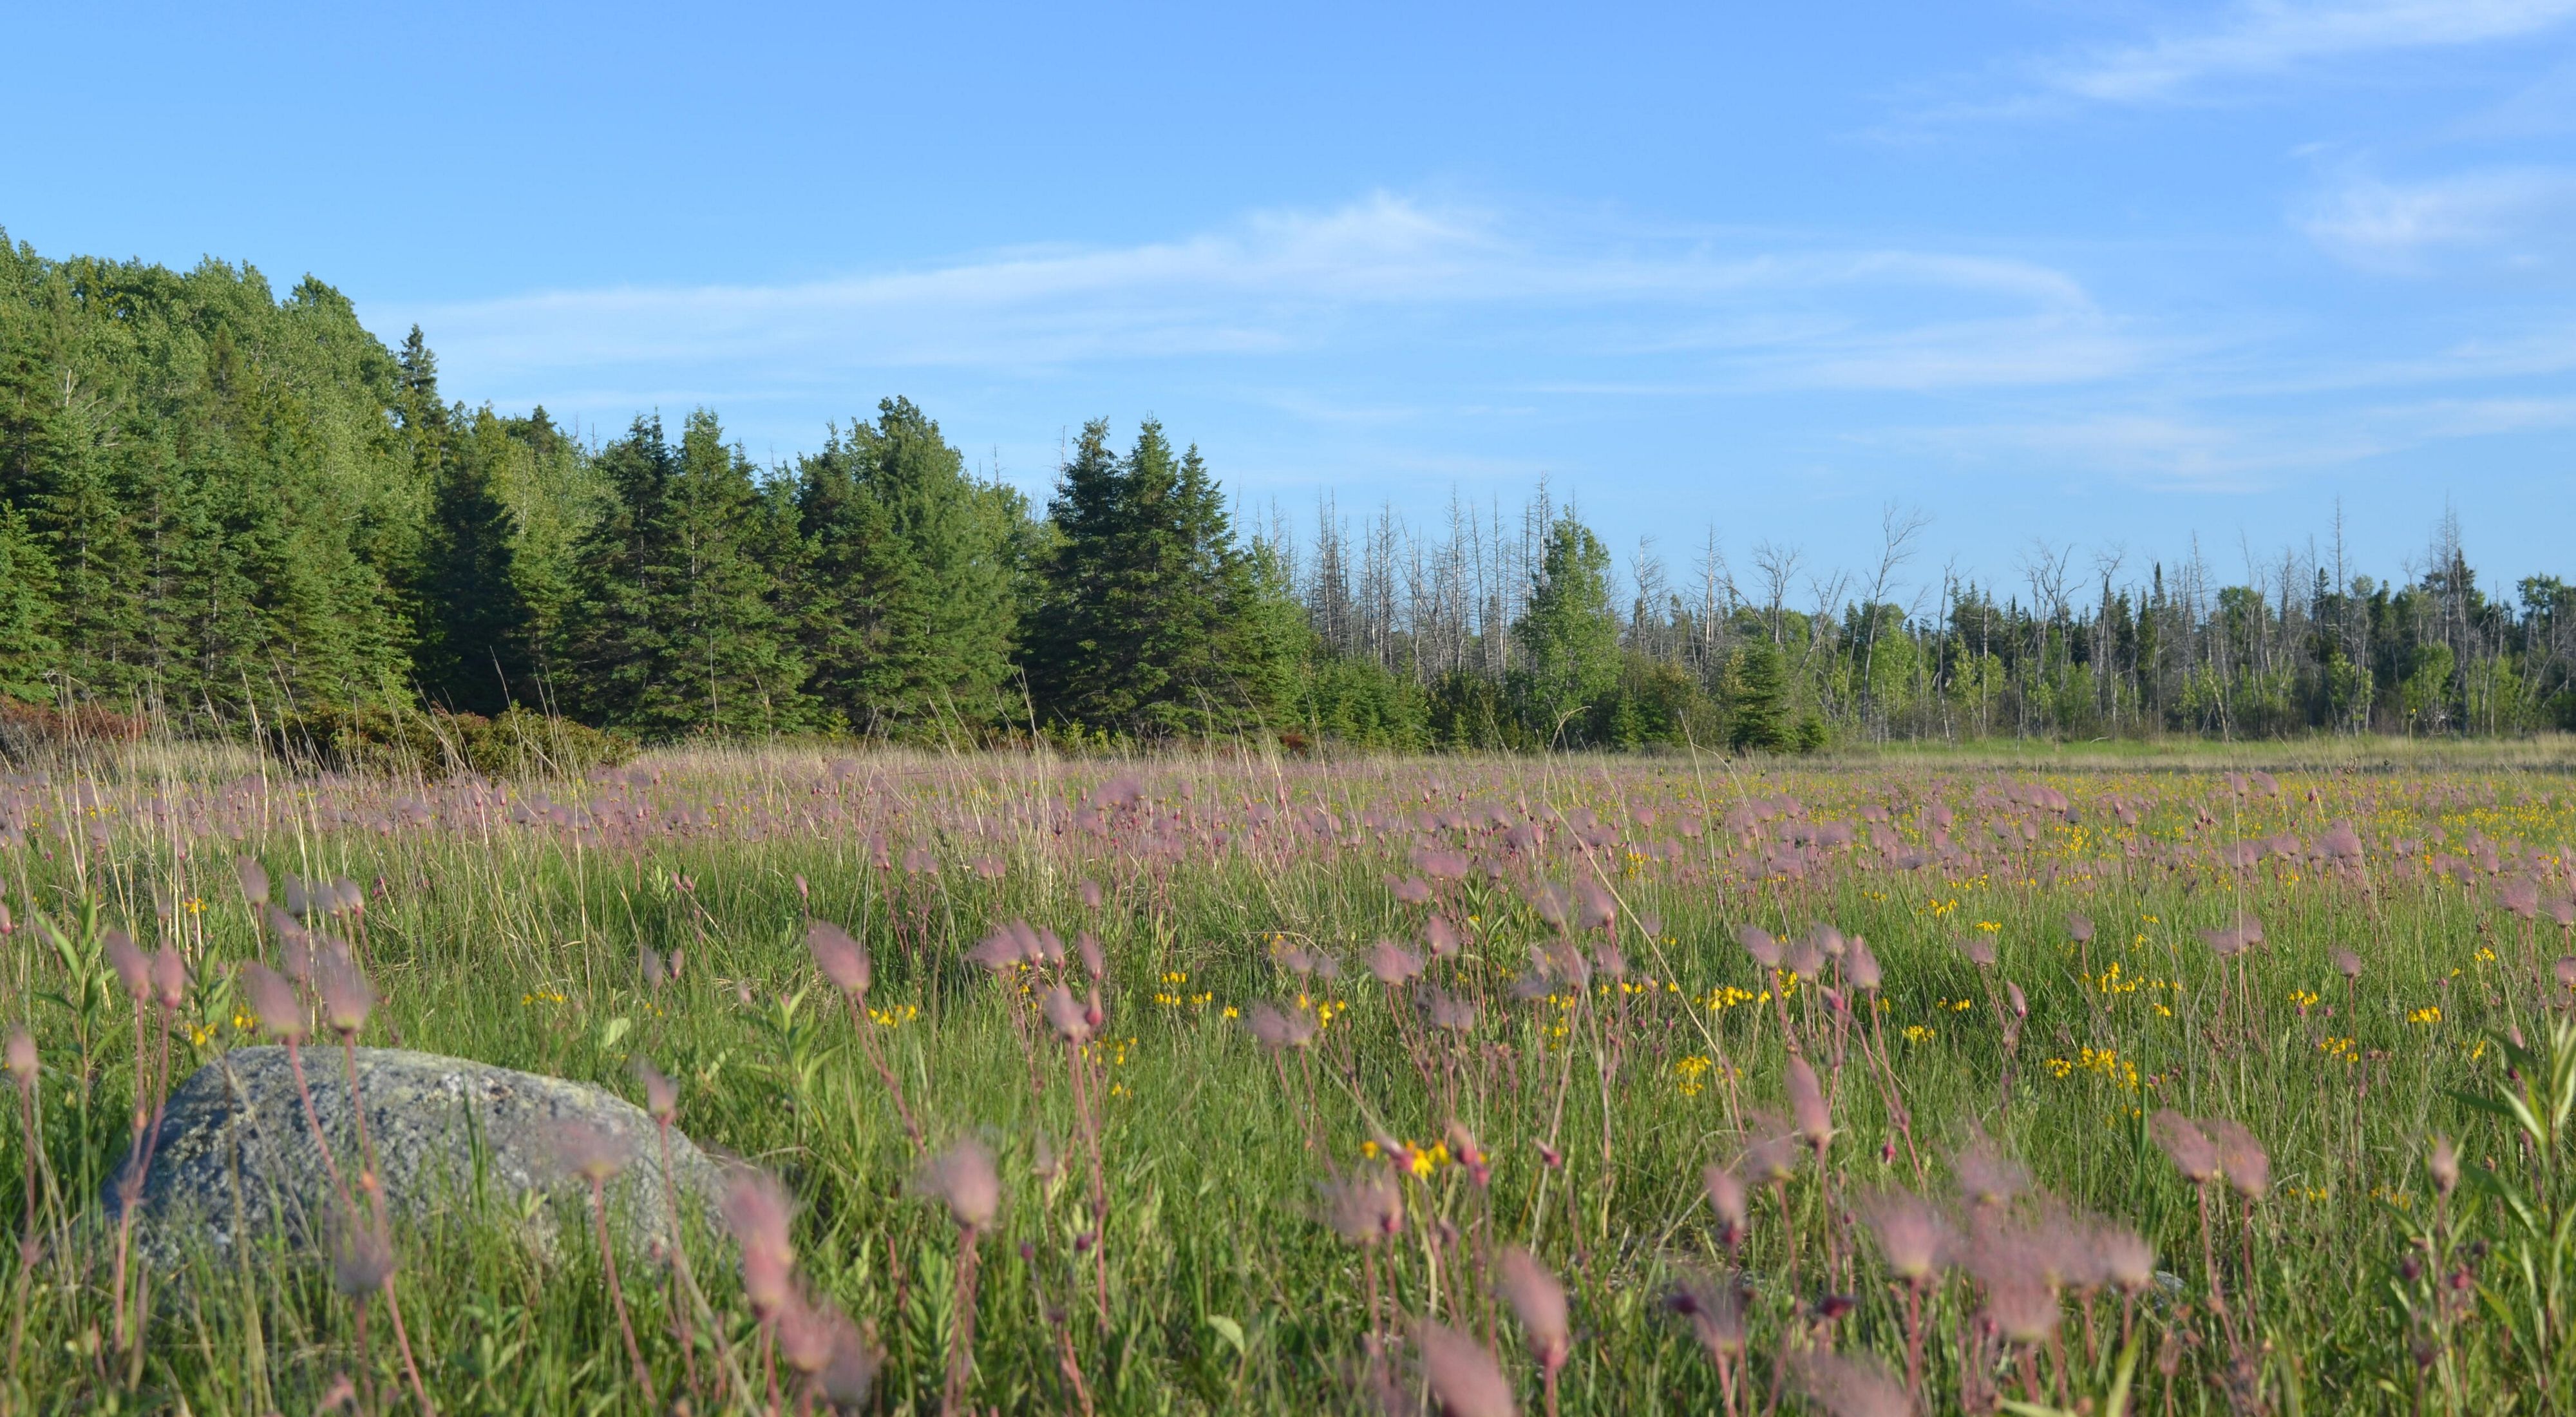 Alvar grassland with an abundance of prairie smoke plants.